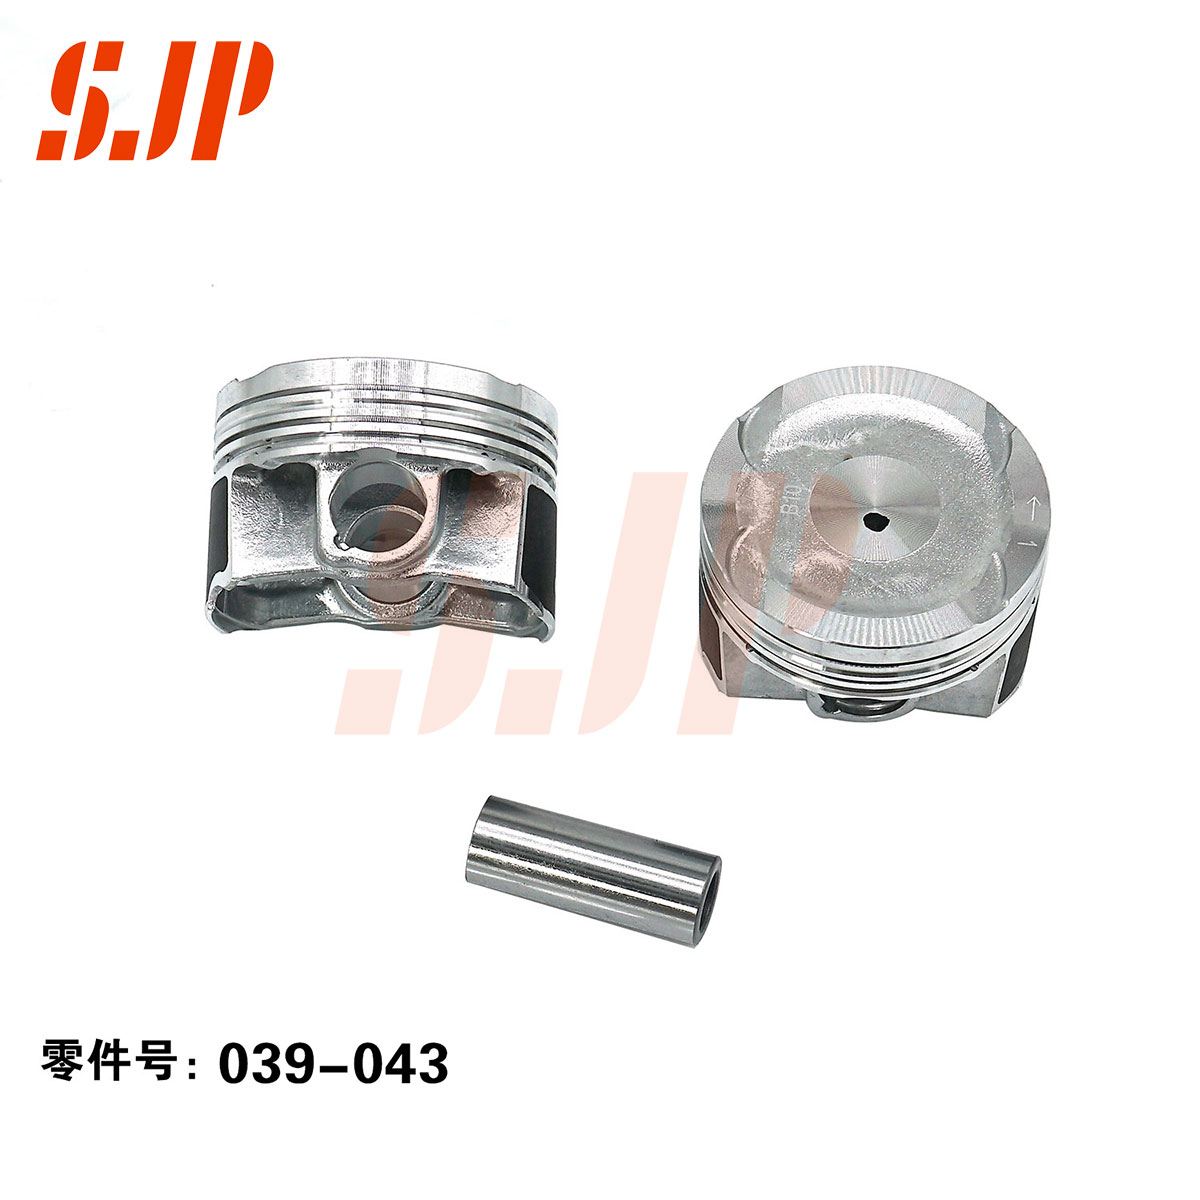 SJ-039-043 Piston And Pin For Changan CX70/1.5T/B10